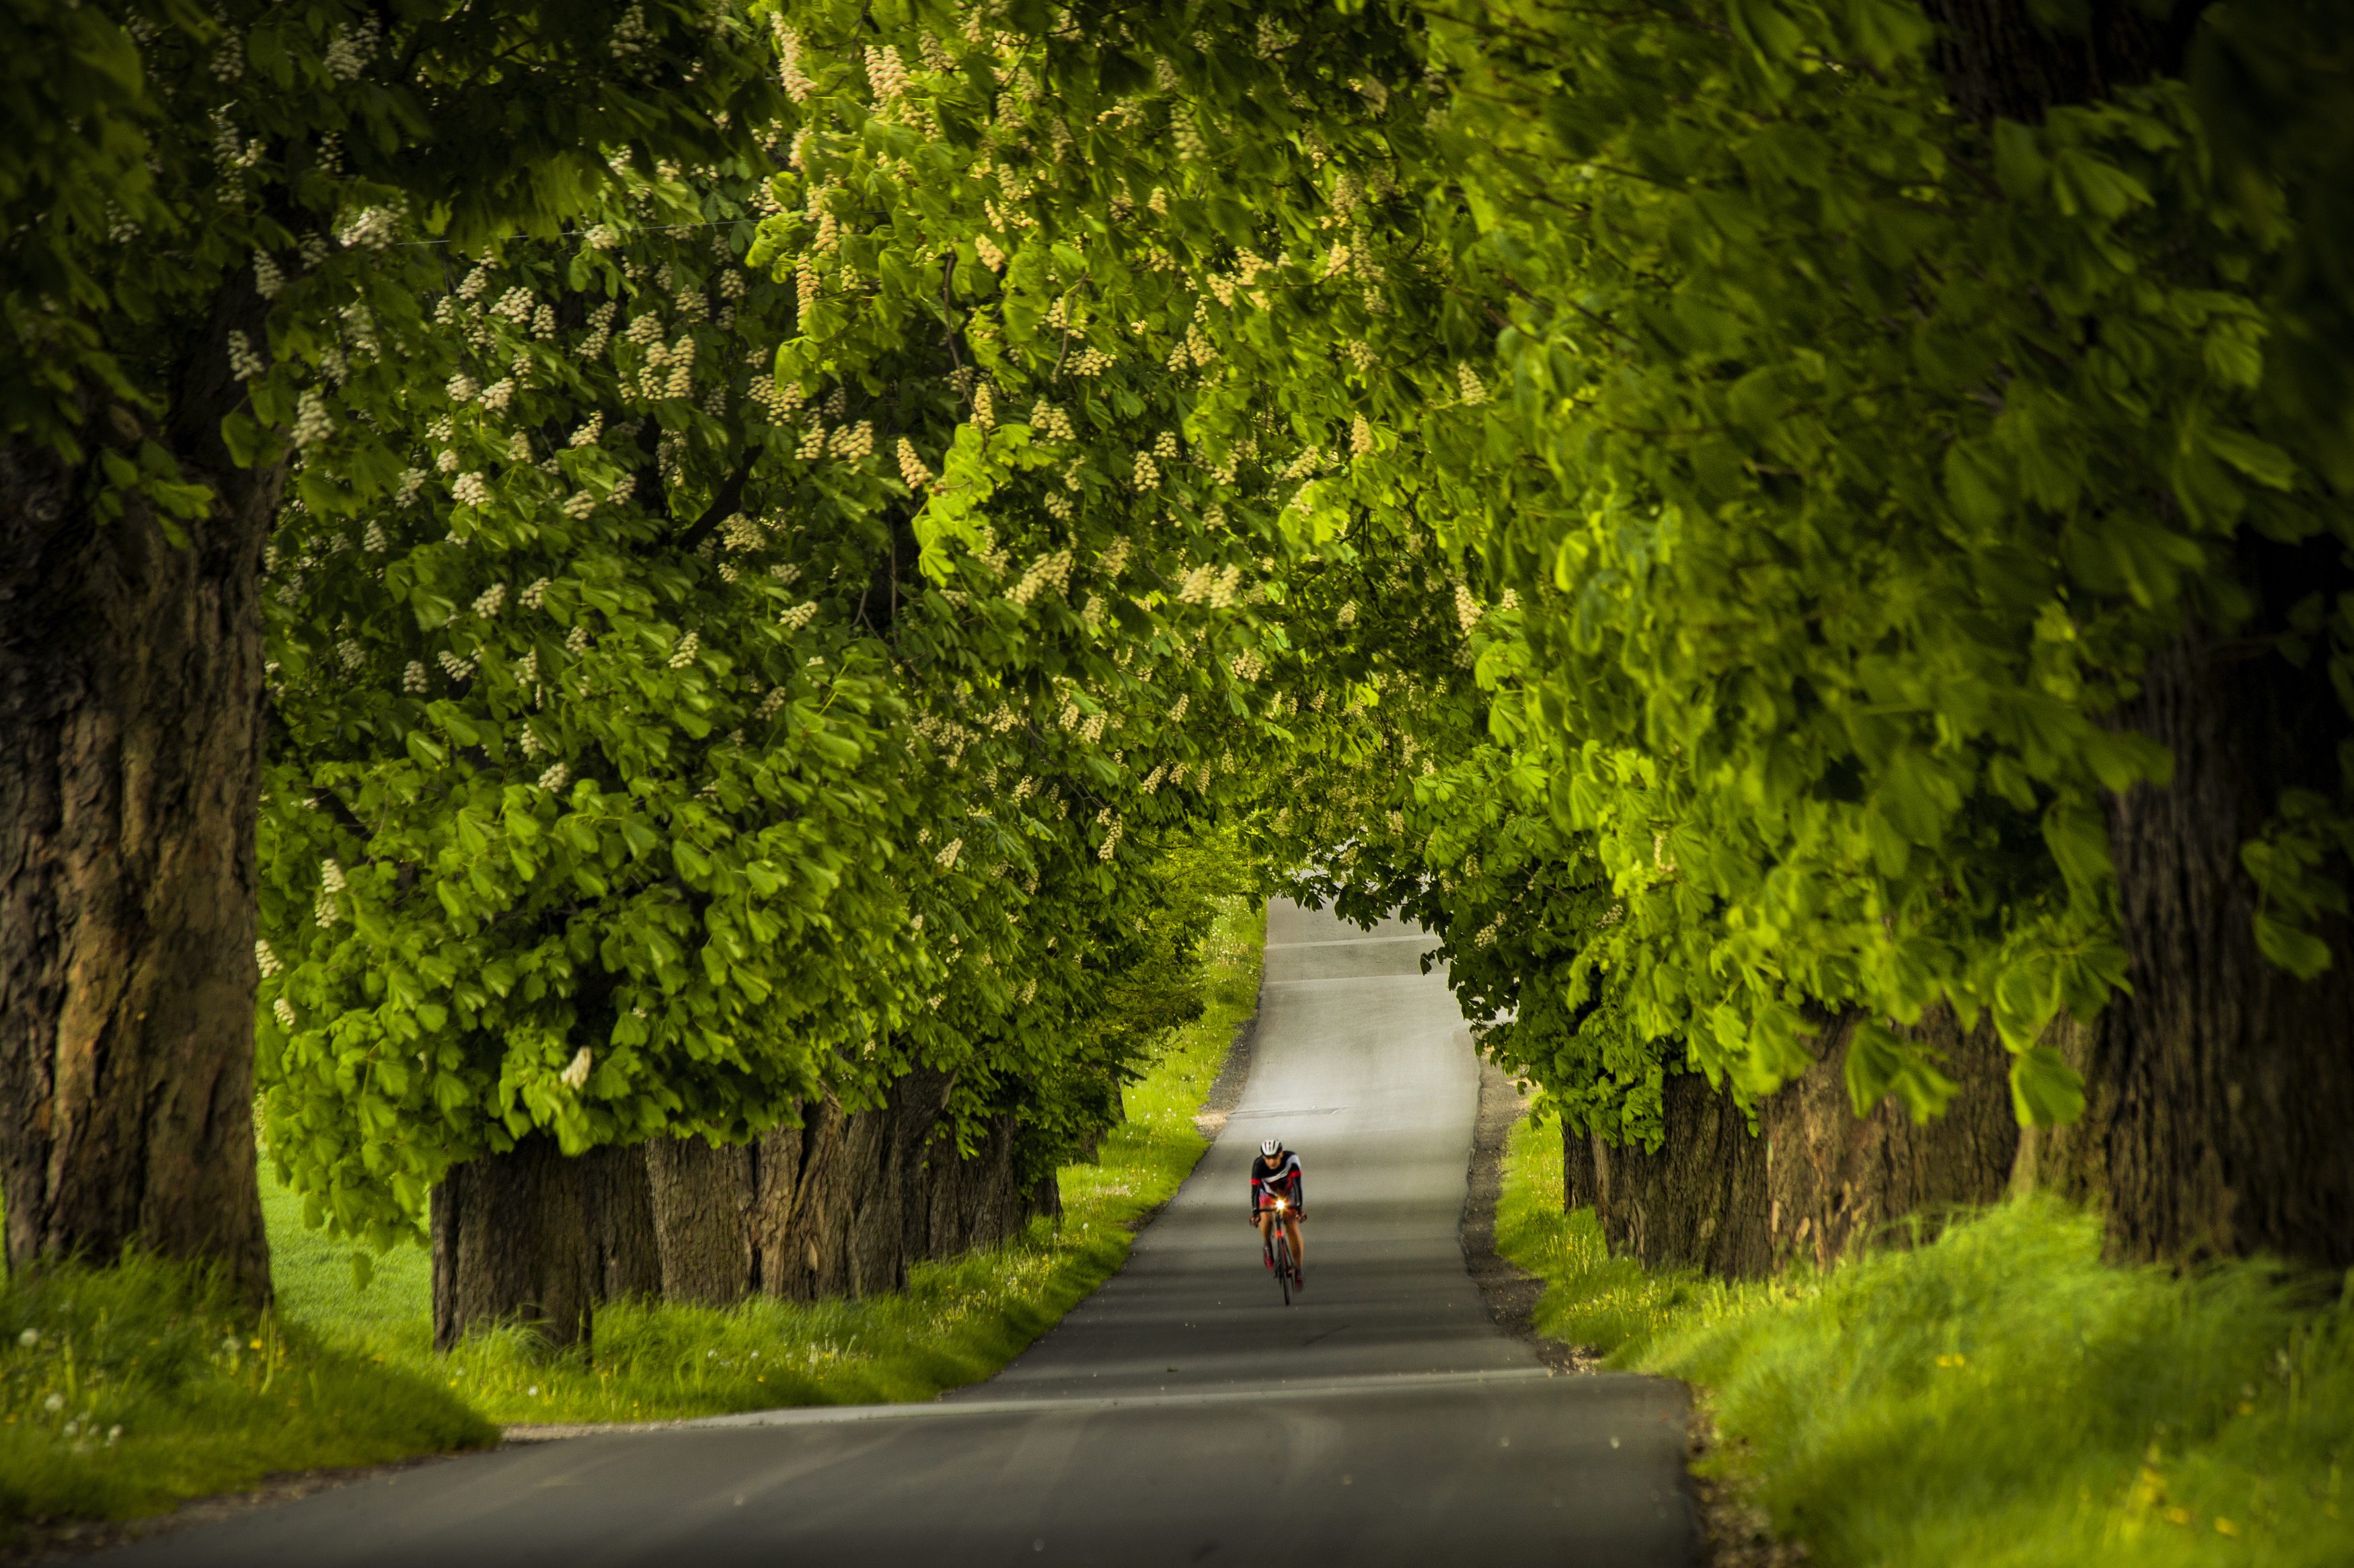 Tree, Road, Green, Nature, Rural, Plant, Bike, Landscape, Poland, transportation, Damian Cyfka